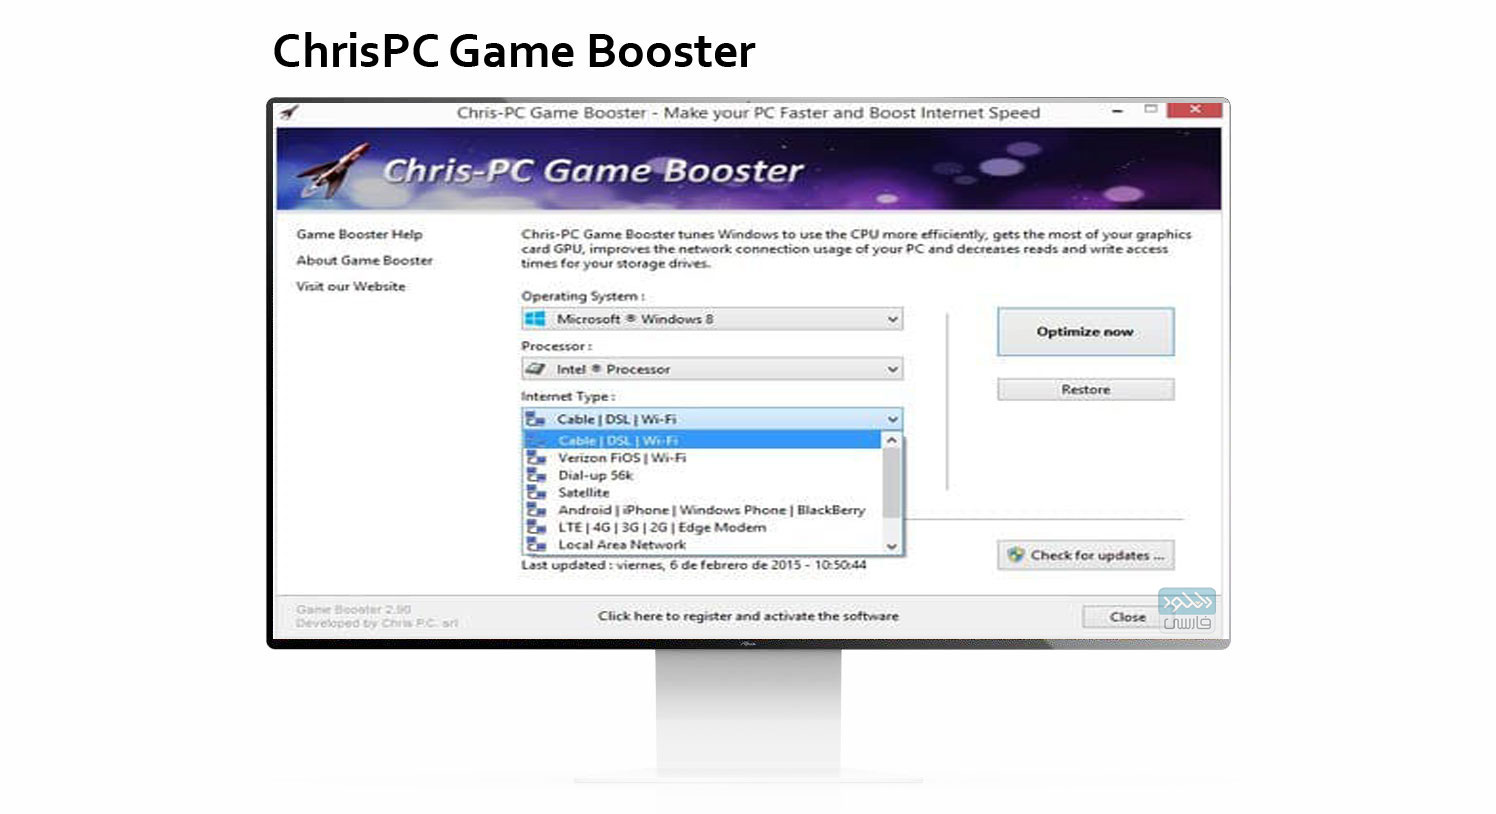 instaling Chris-PC RAM Booster 7.07.19